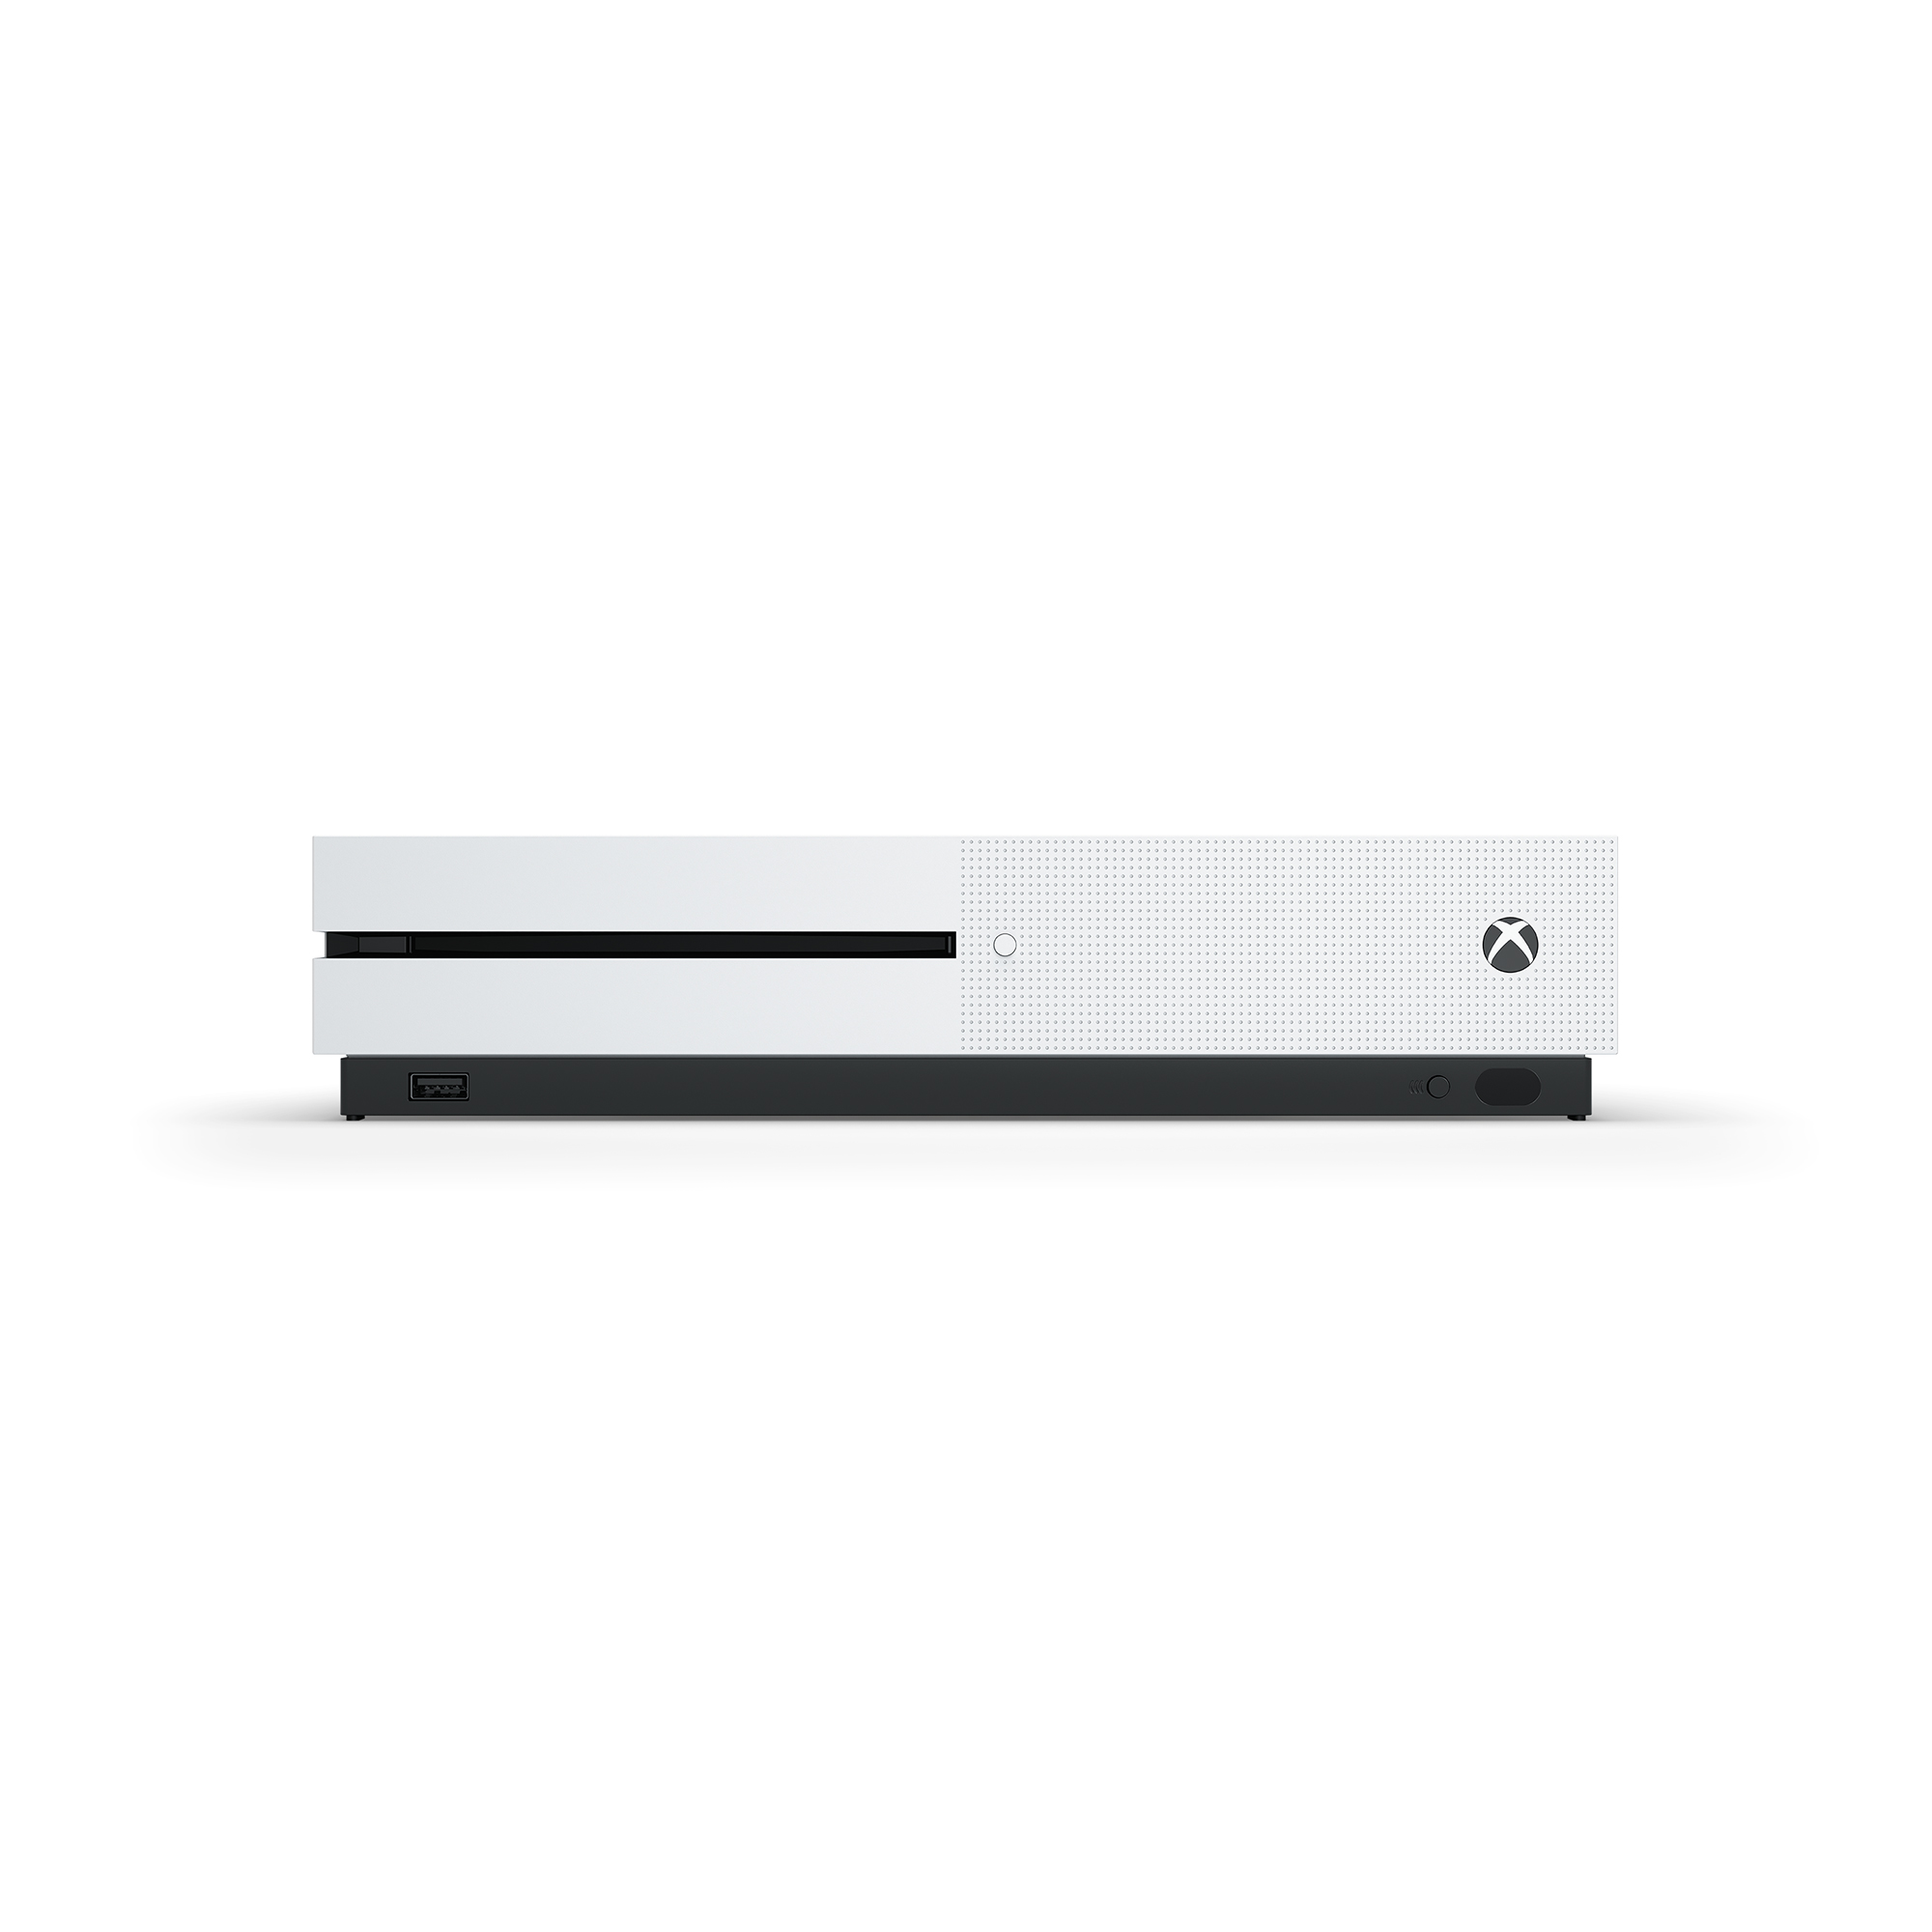 Microsoft Xbox One S 1TB Battlefield V Bundle, White, 234-00679 - image 4 of 11